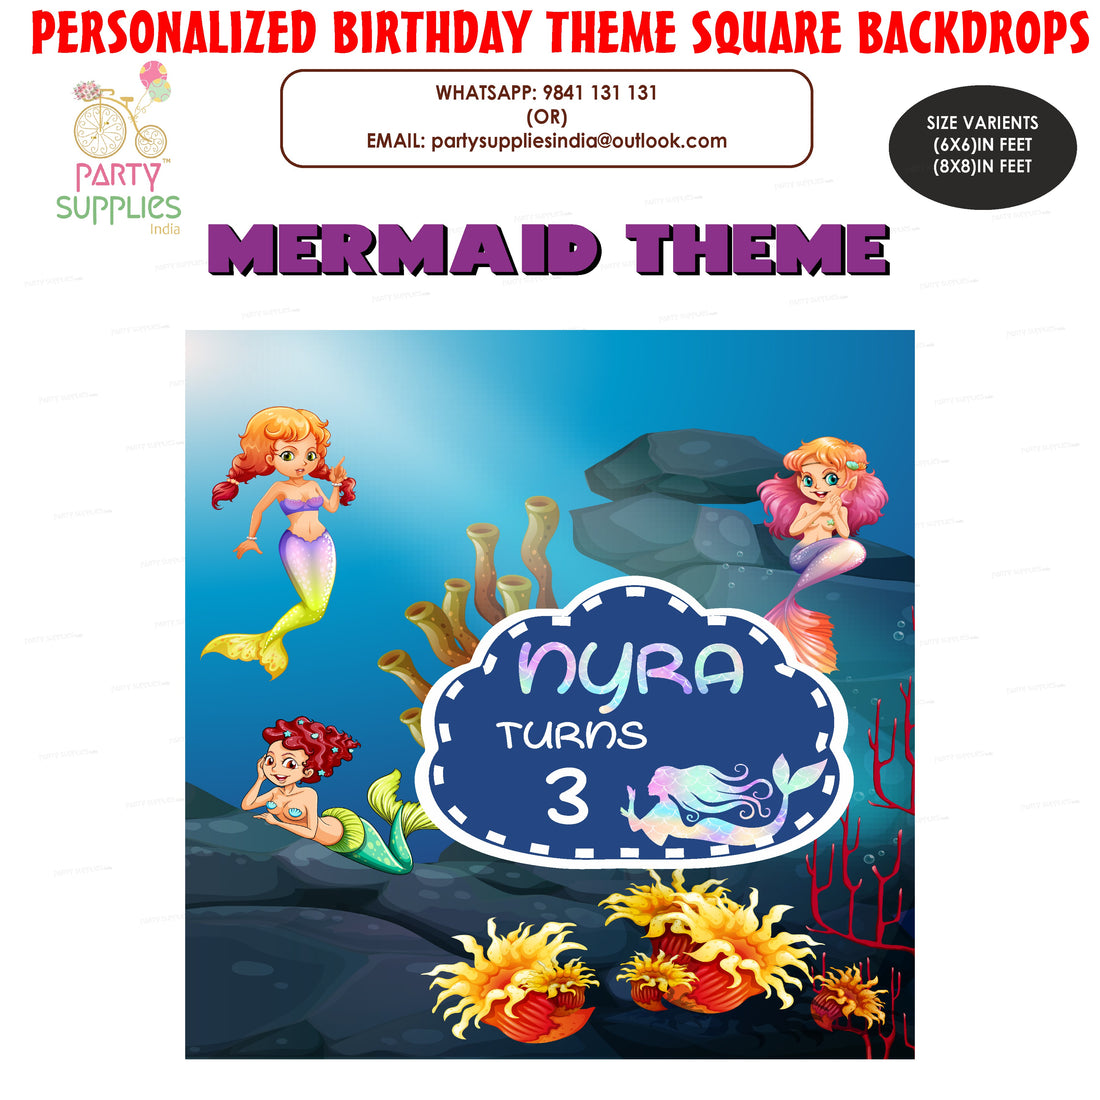 Mermaid Theme Customized Square Backdrop